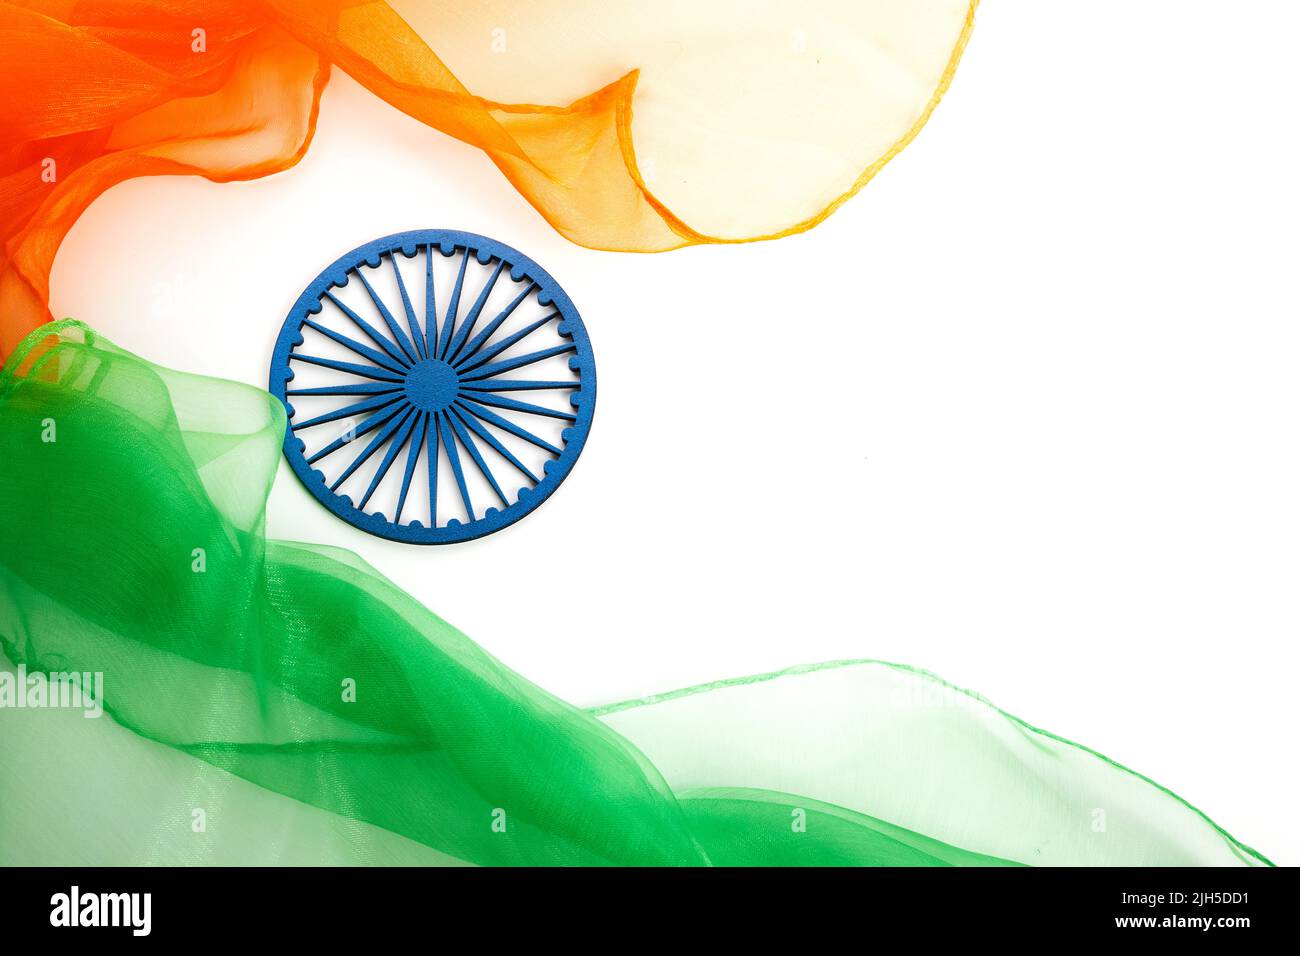 Indian Independence Day concept background with Ashoka wheel Stock Photo -  Alamy